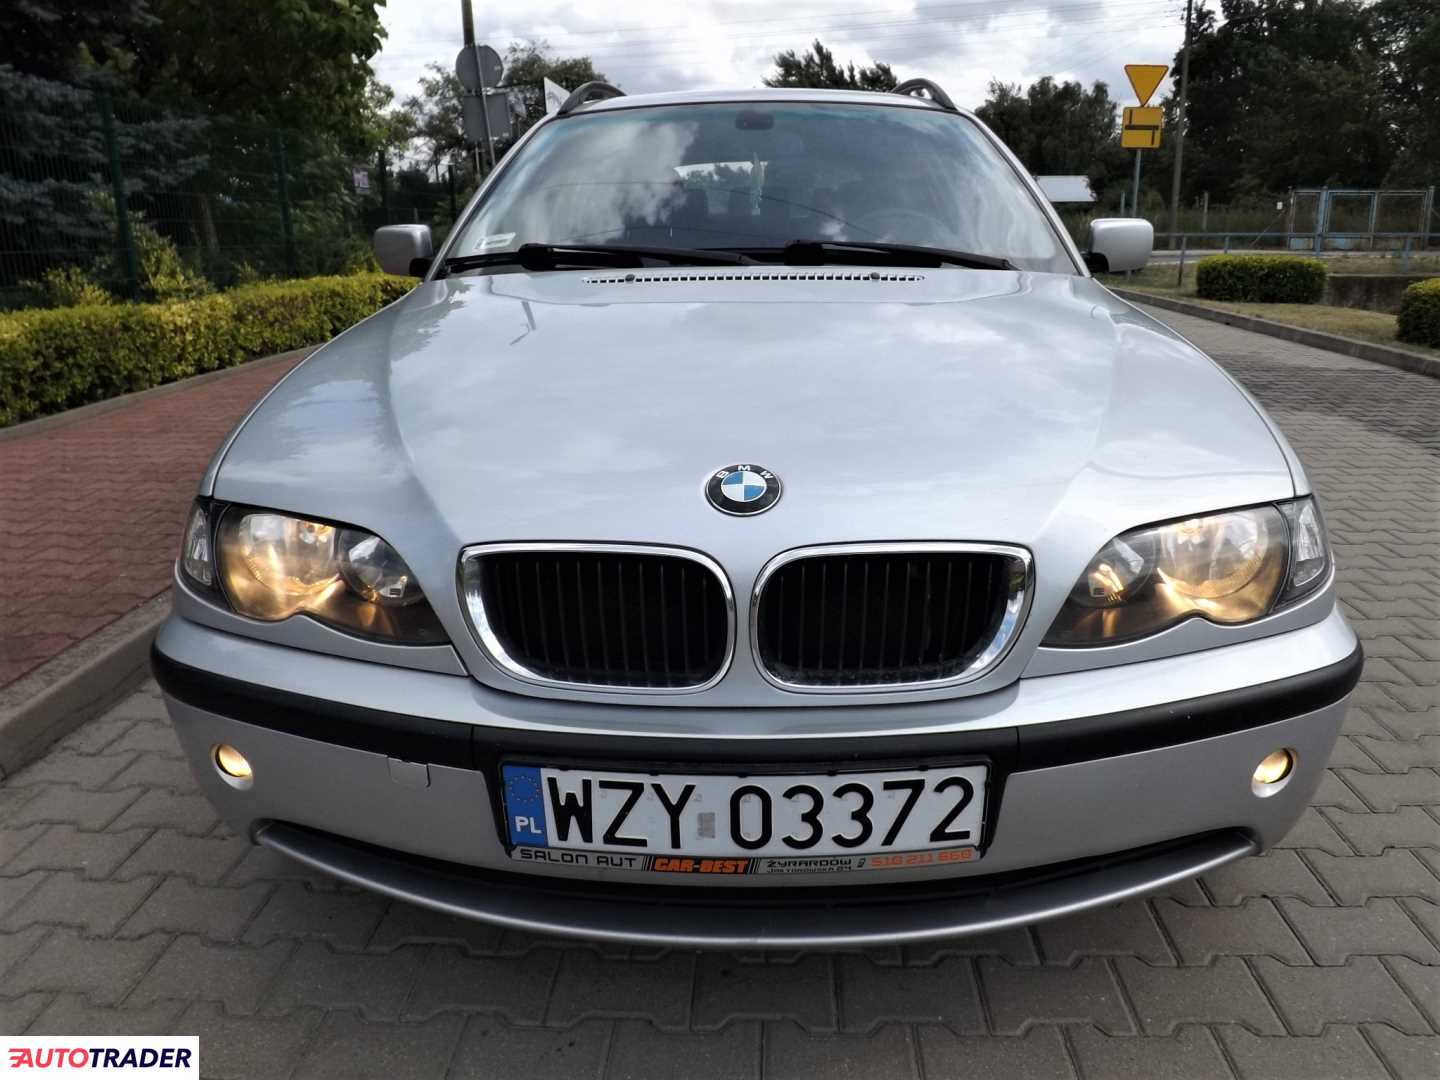 BMW 320 2.0 diesel 150 KM 2005r. (Żyrardów) Autotrader.pl